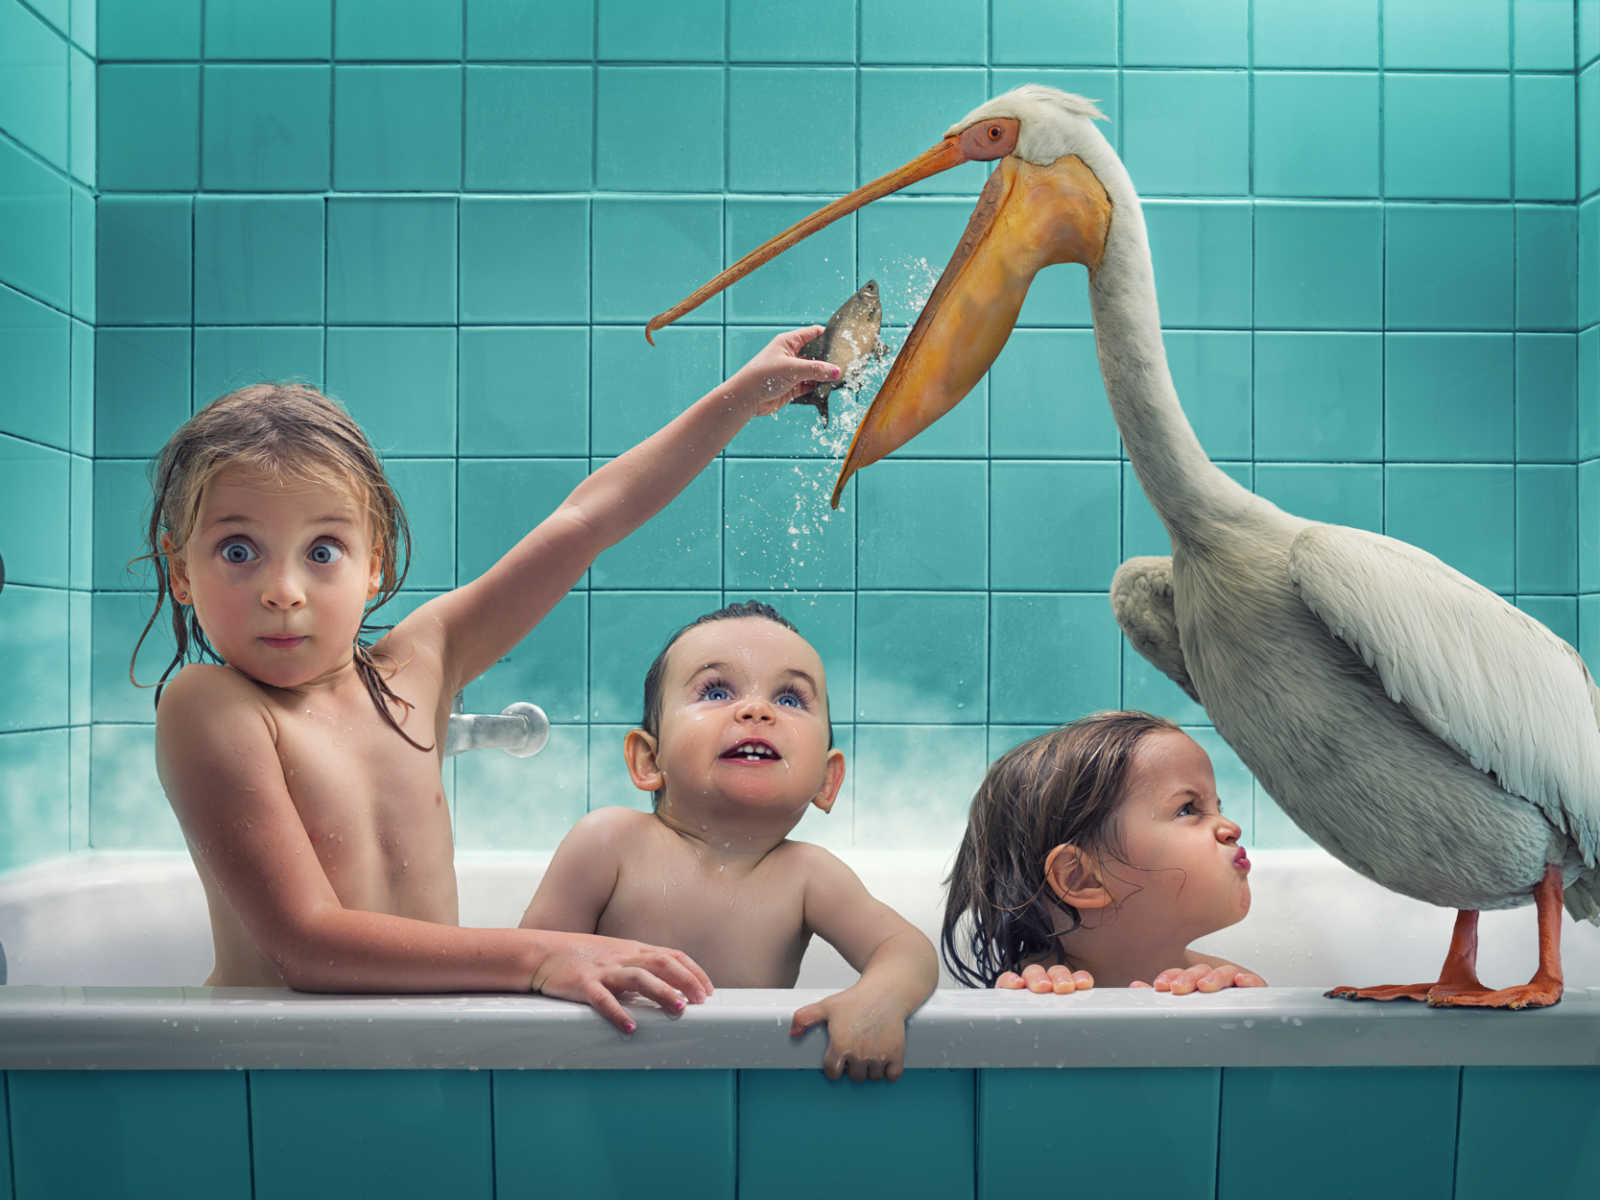 John Wilhelm is a photoholic. three toddlers sit in bath tub while oldest f...